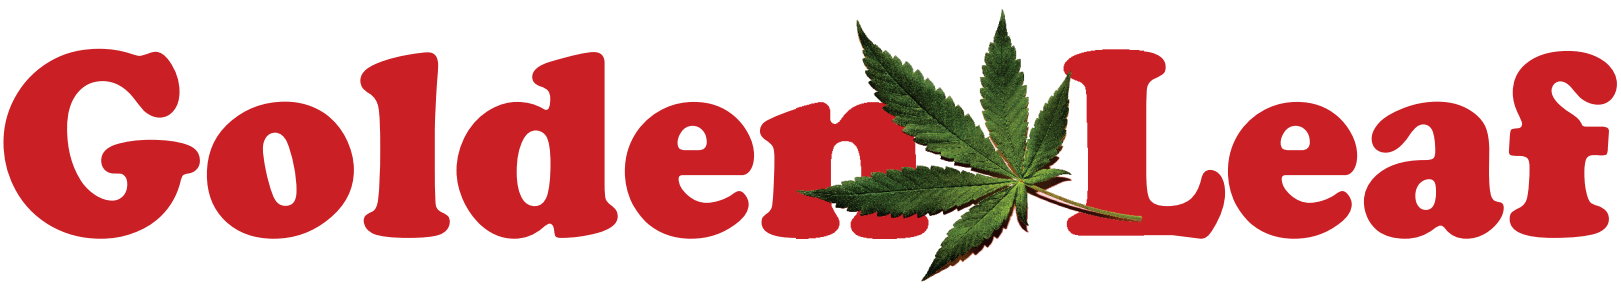 Golden Leaf Cannabis Dispensary